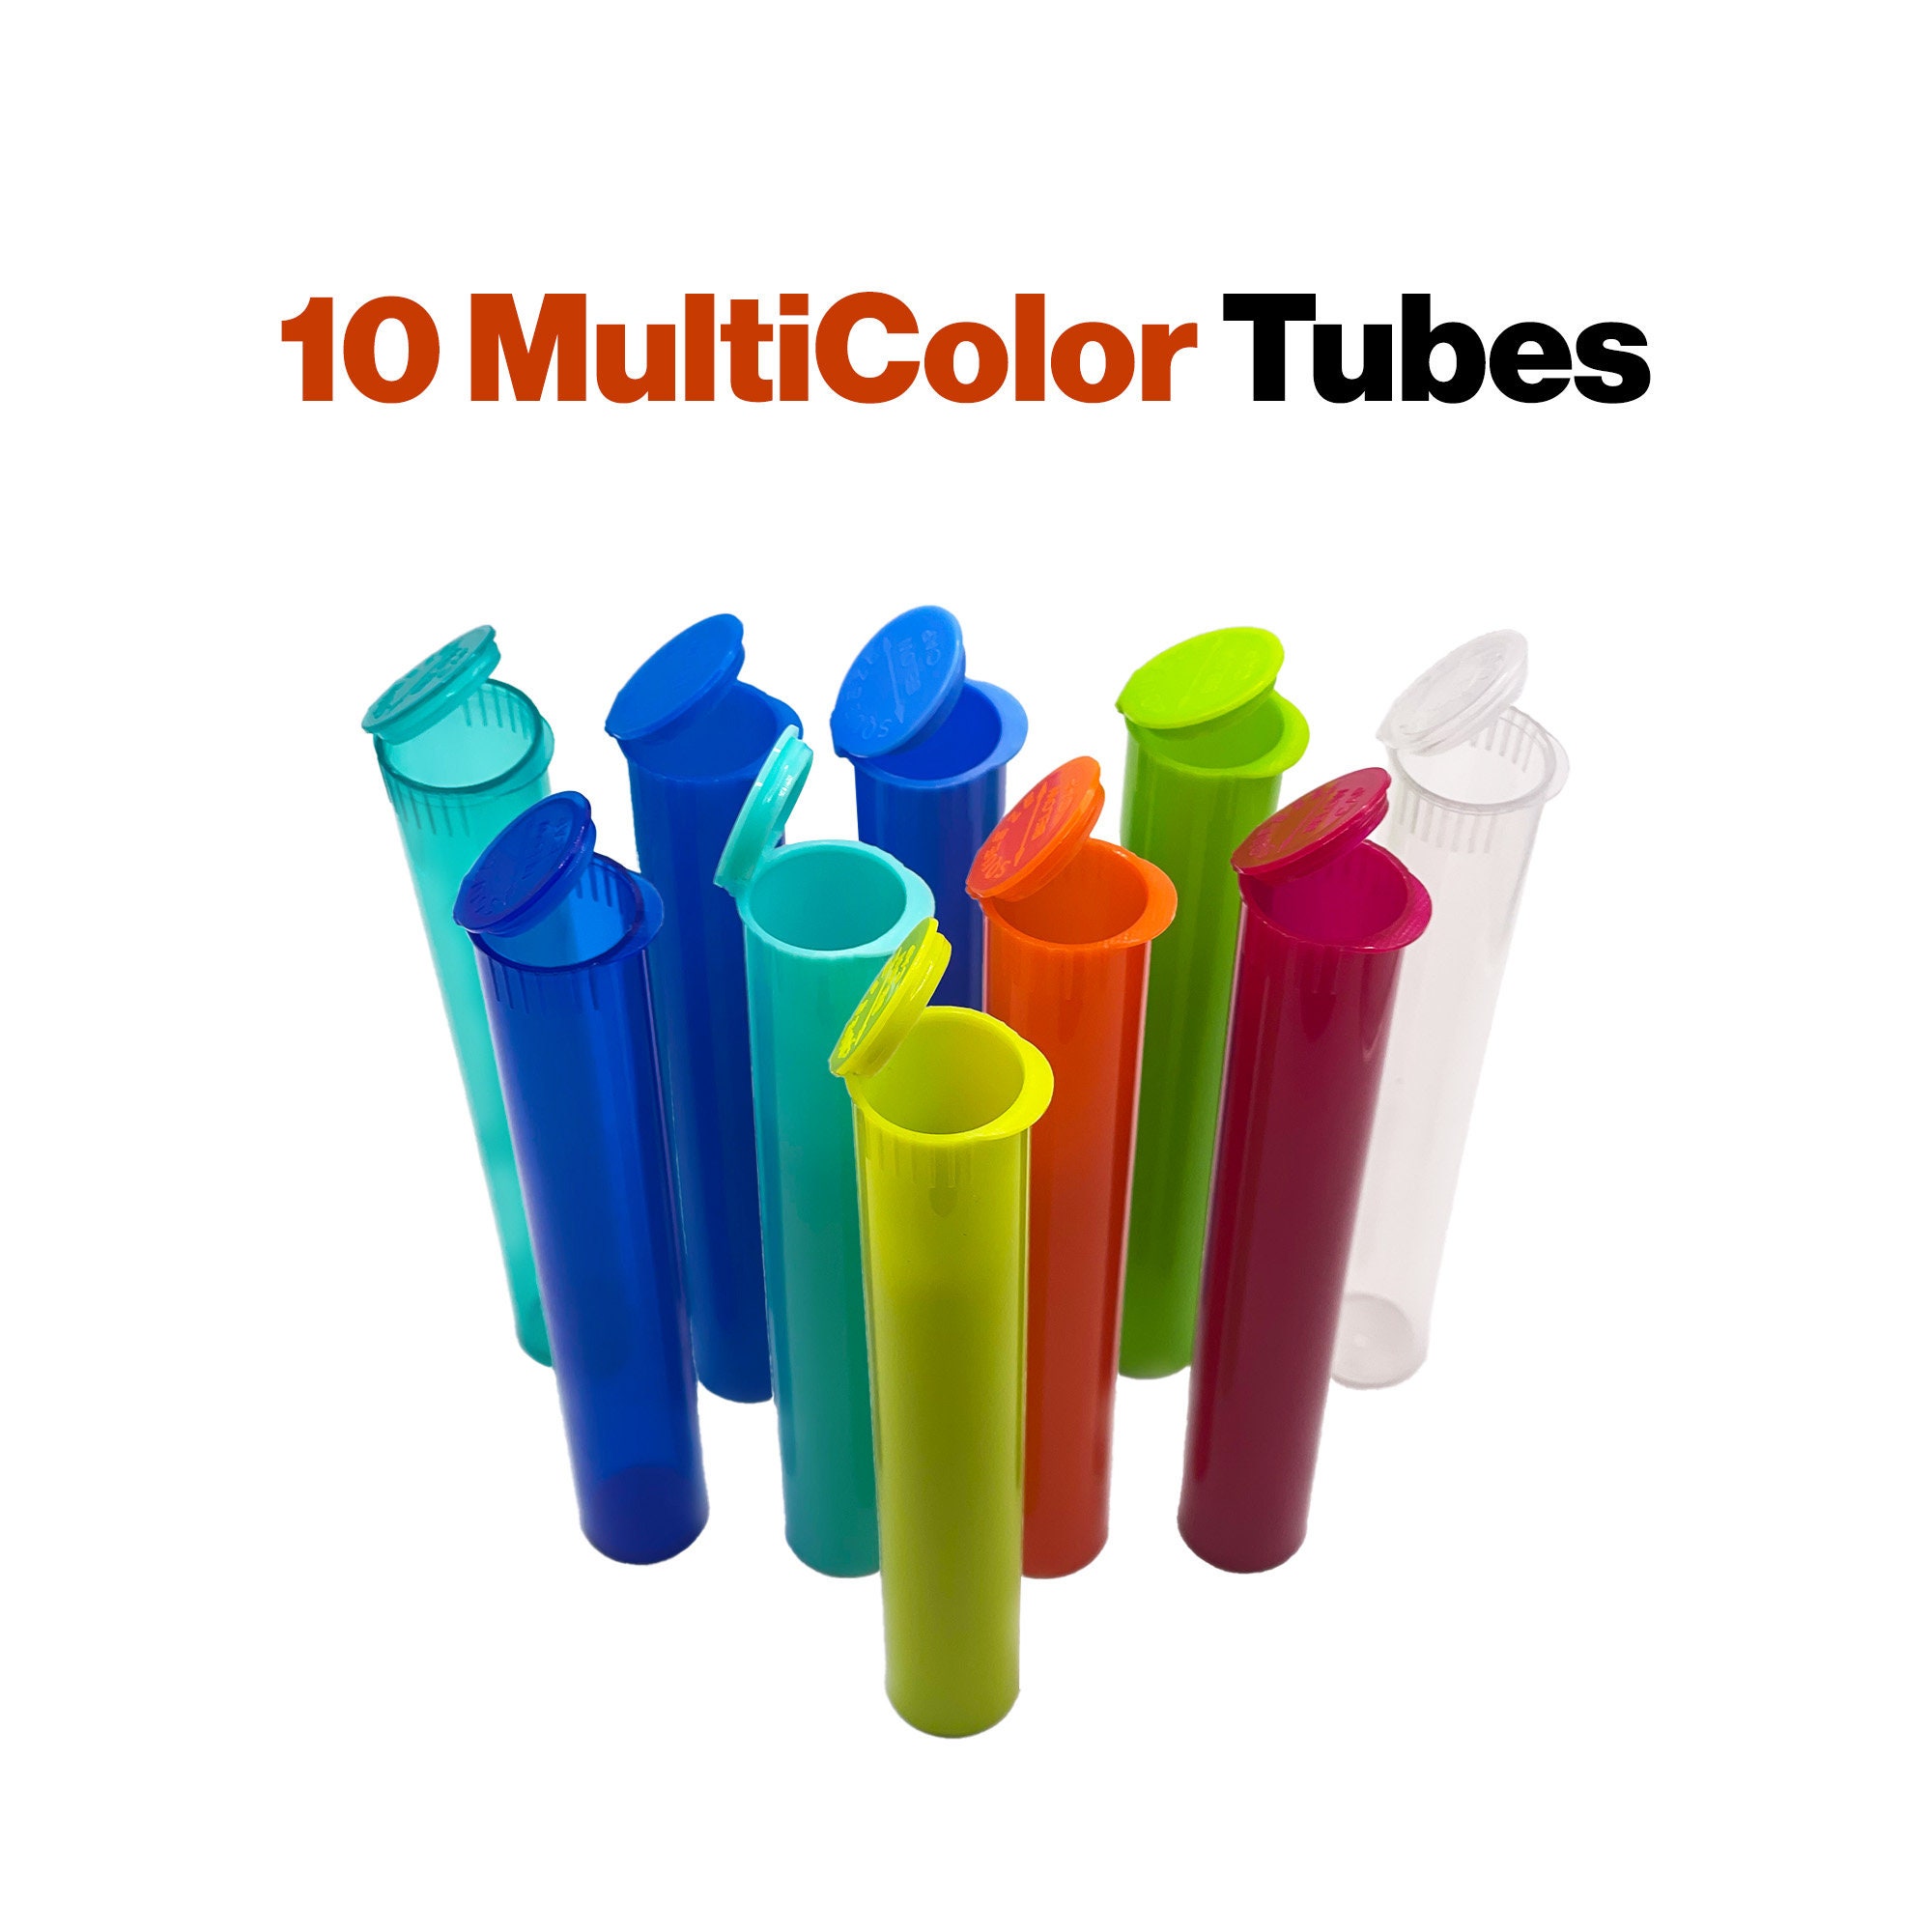 Descrete & Smell Proof J Case / DOOB Tube Kit with Filter Tips